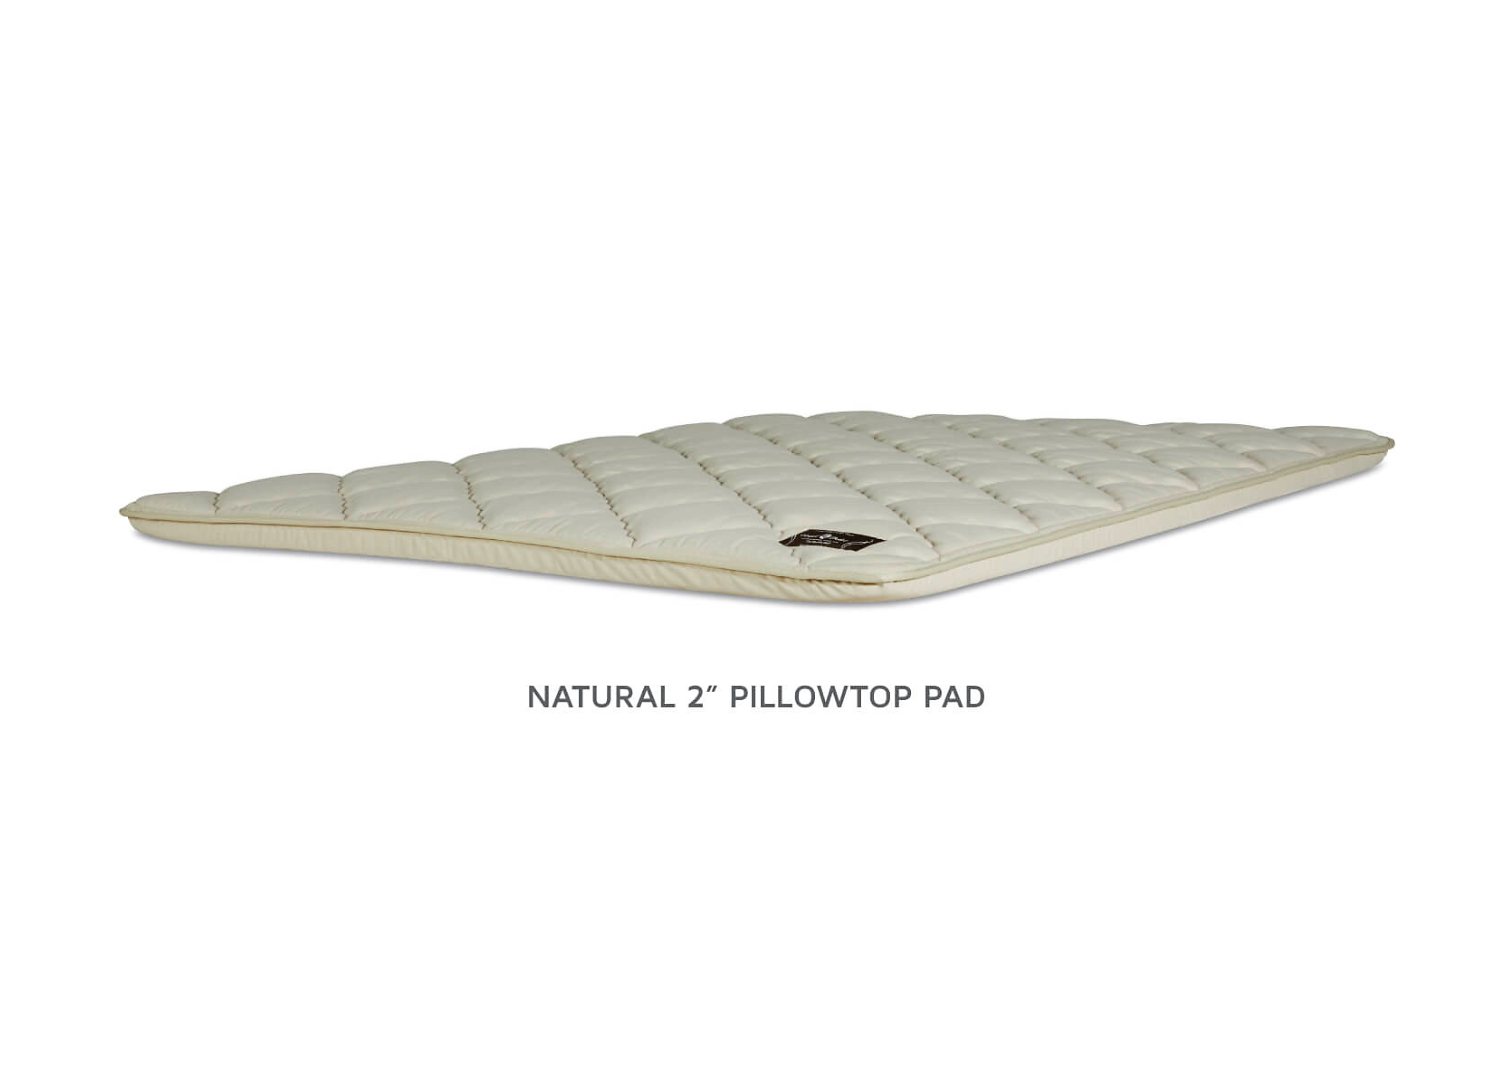 Royal Pedic Natural 2", 3" & 4" Pillow Top Pads